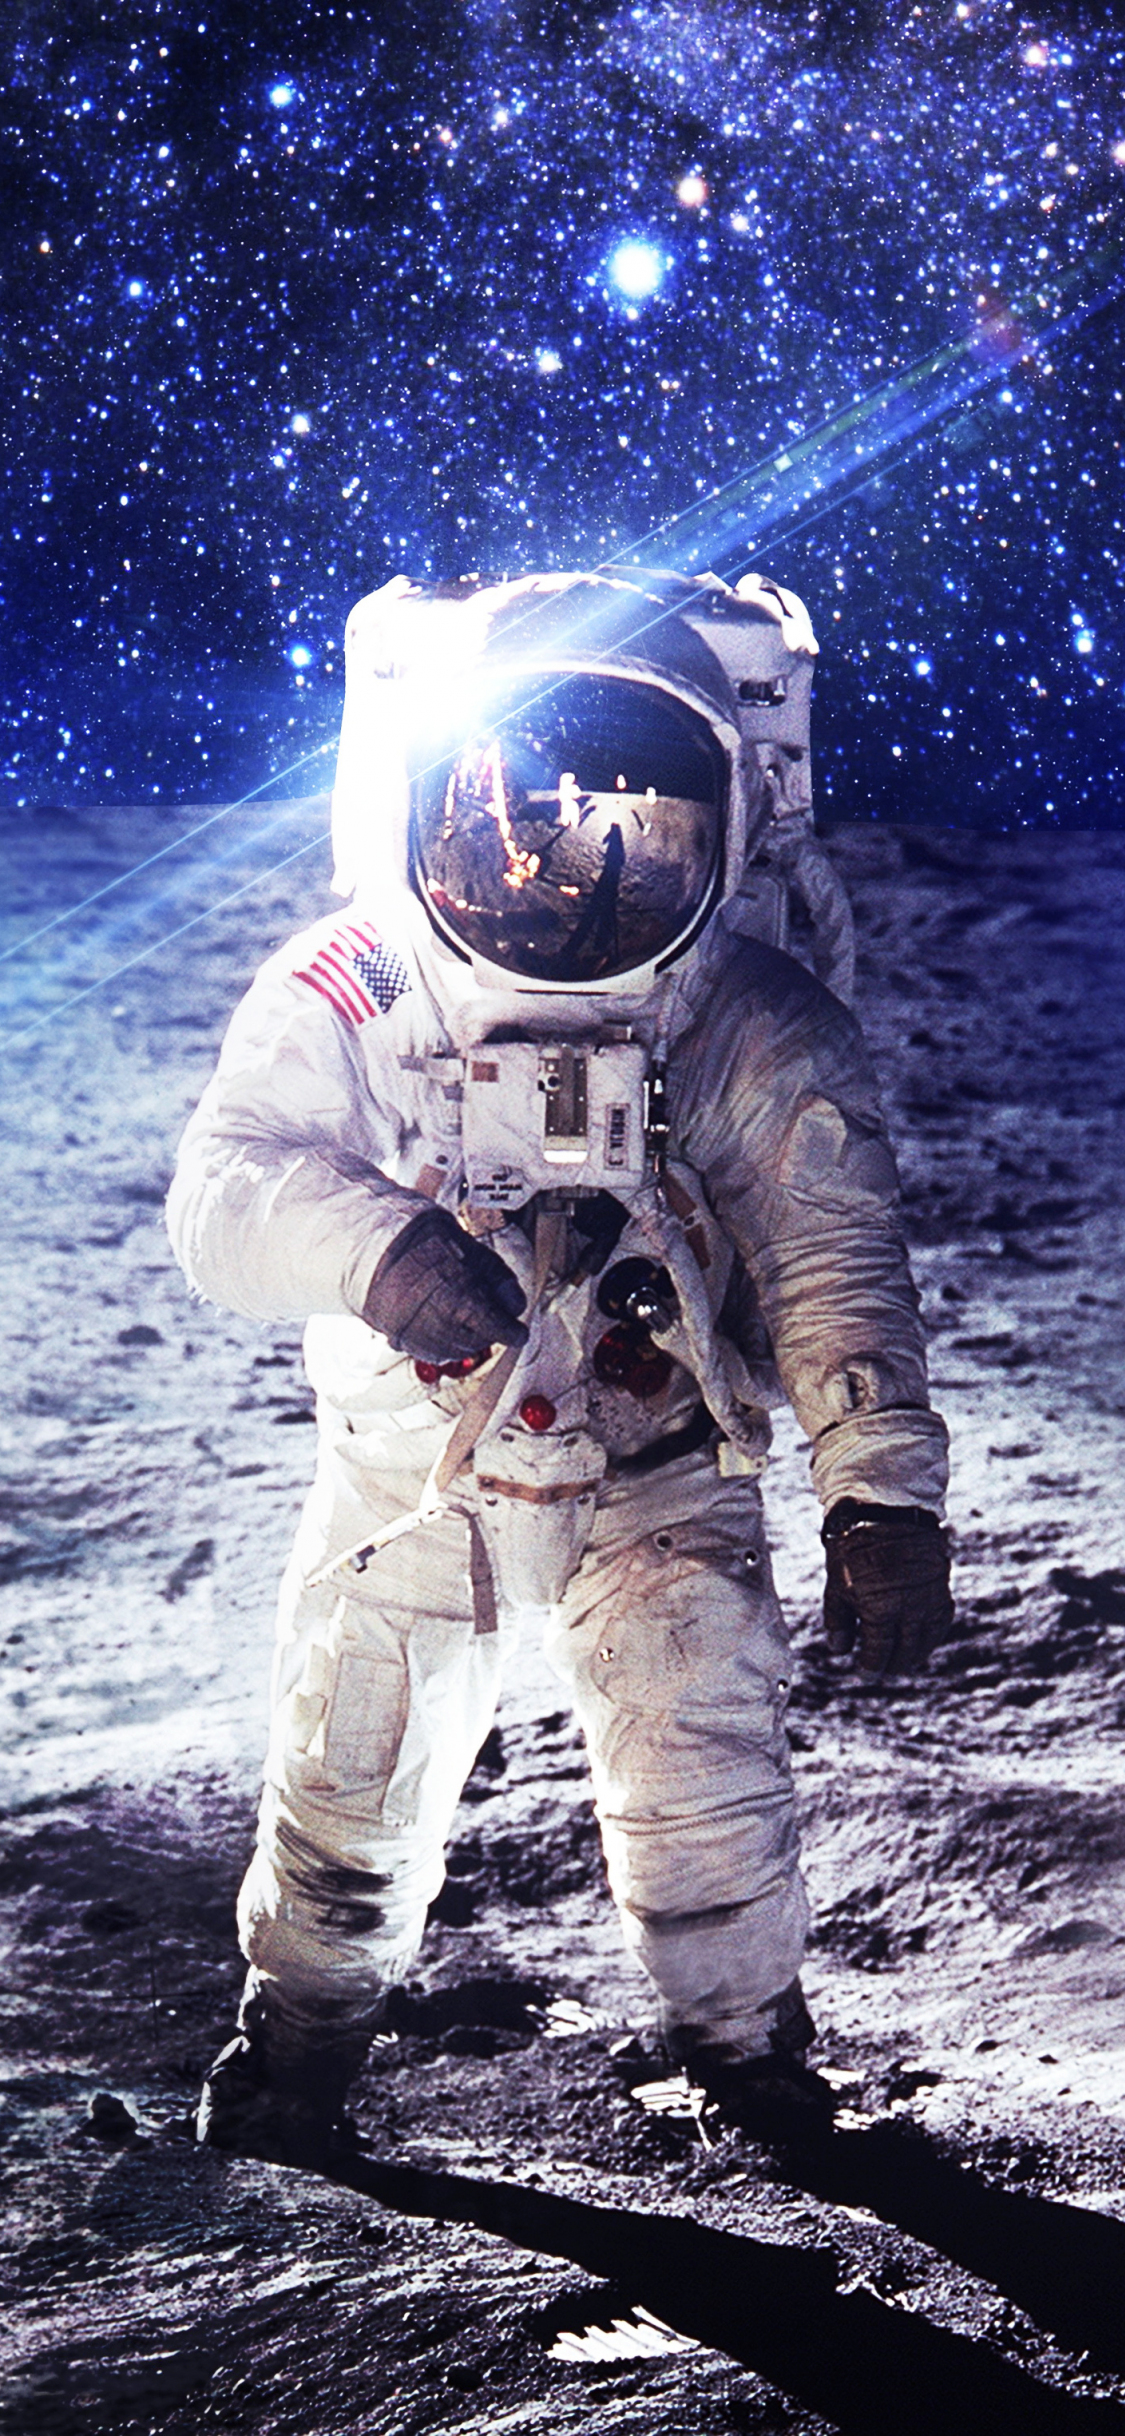 Download wallpaper x space landscape astronaut fantasy iphone x x hd background